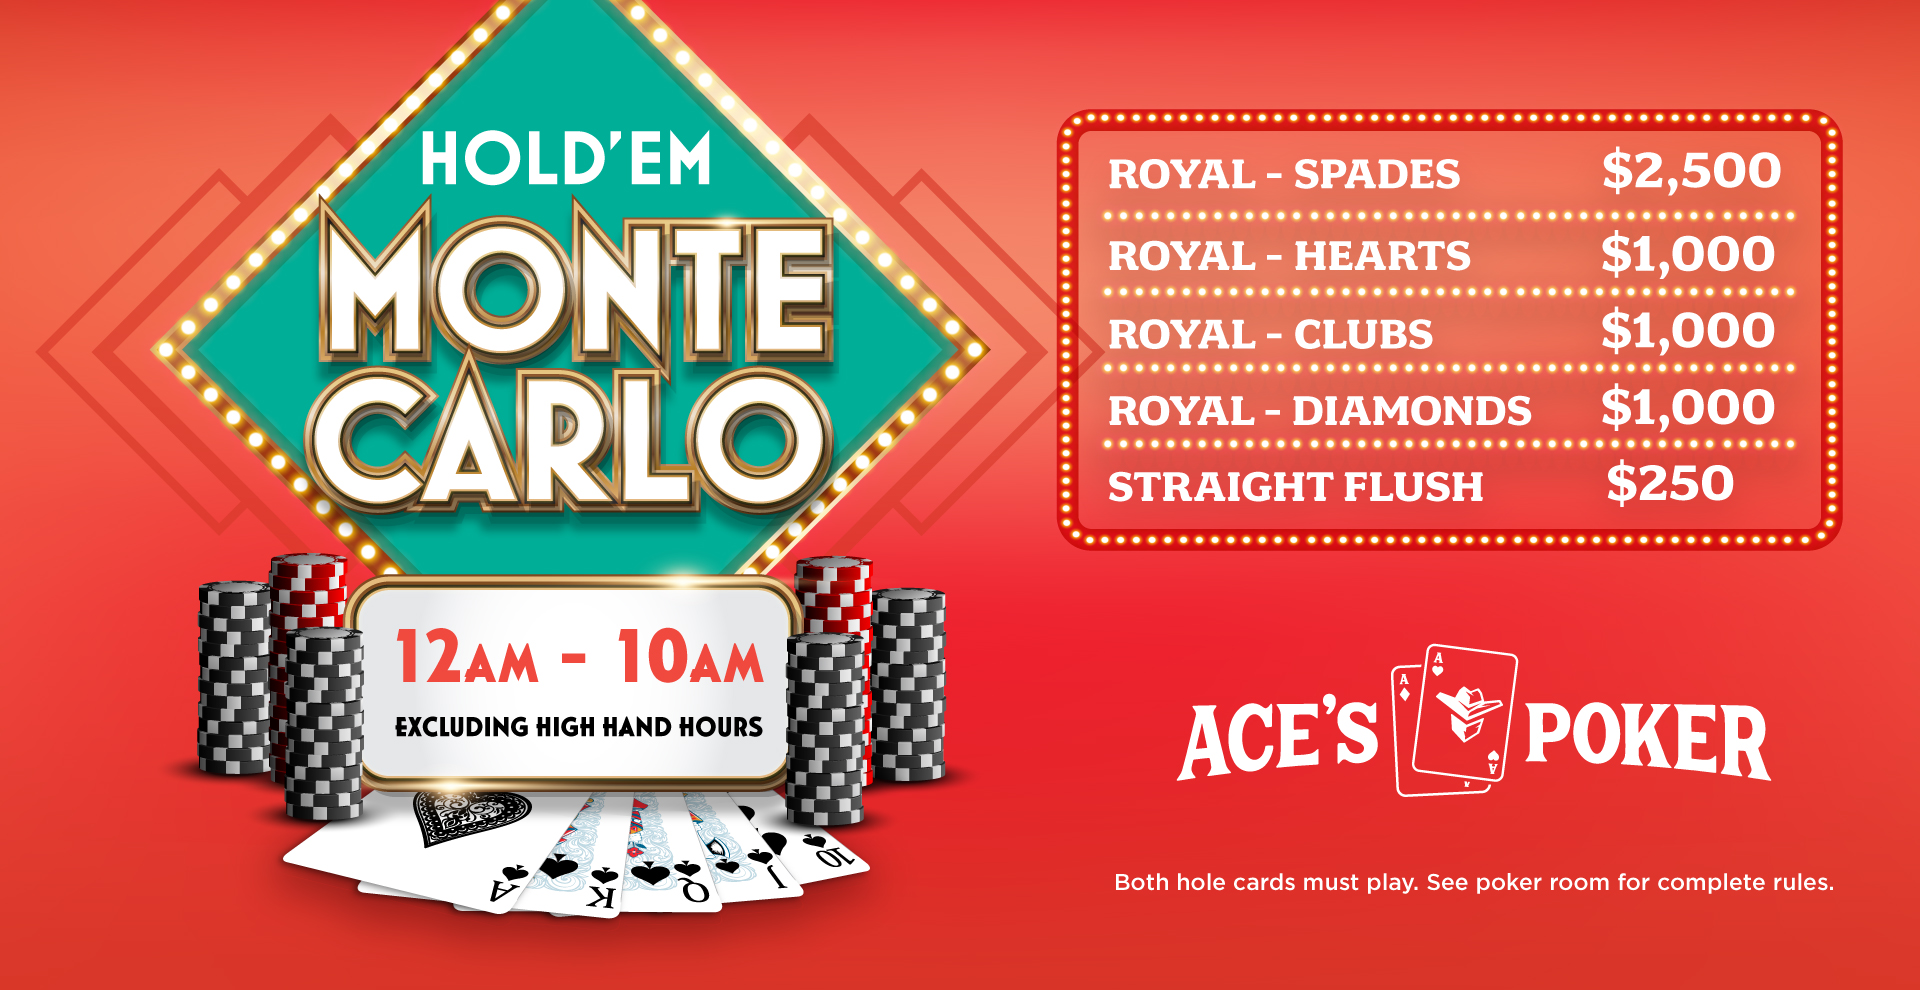 Ace's Poker Mountlake Terrace Washington | Hold'em Monte Carlo